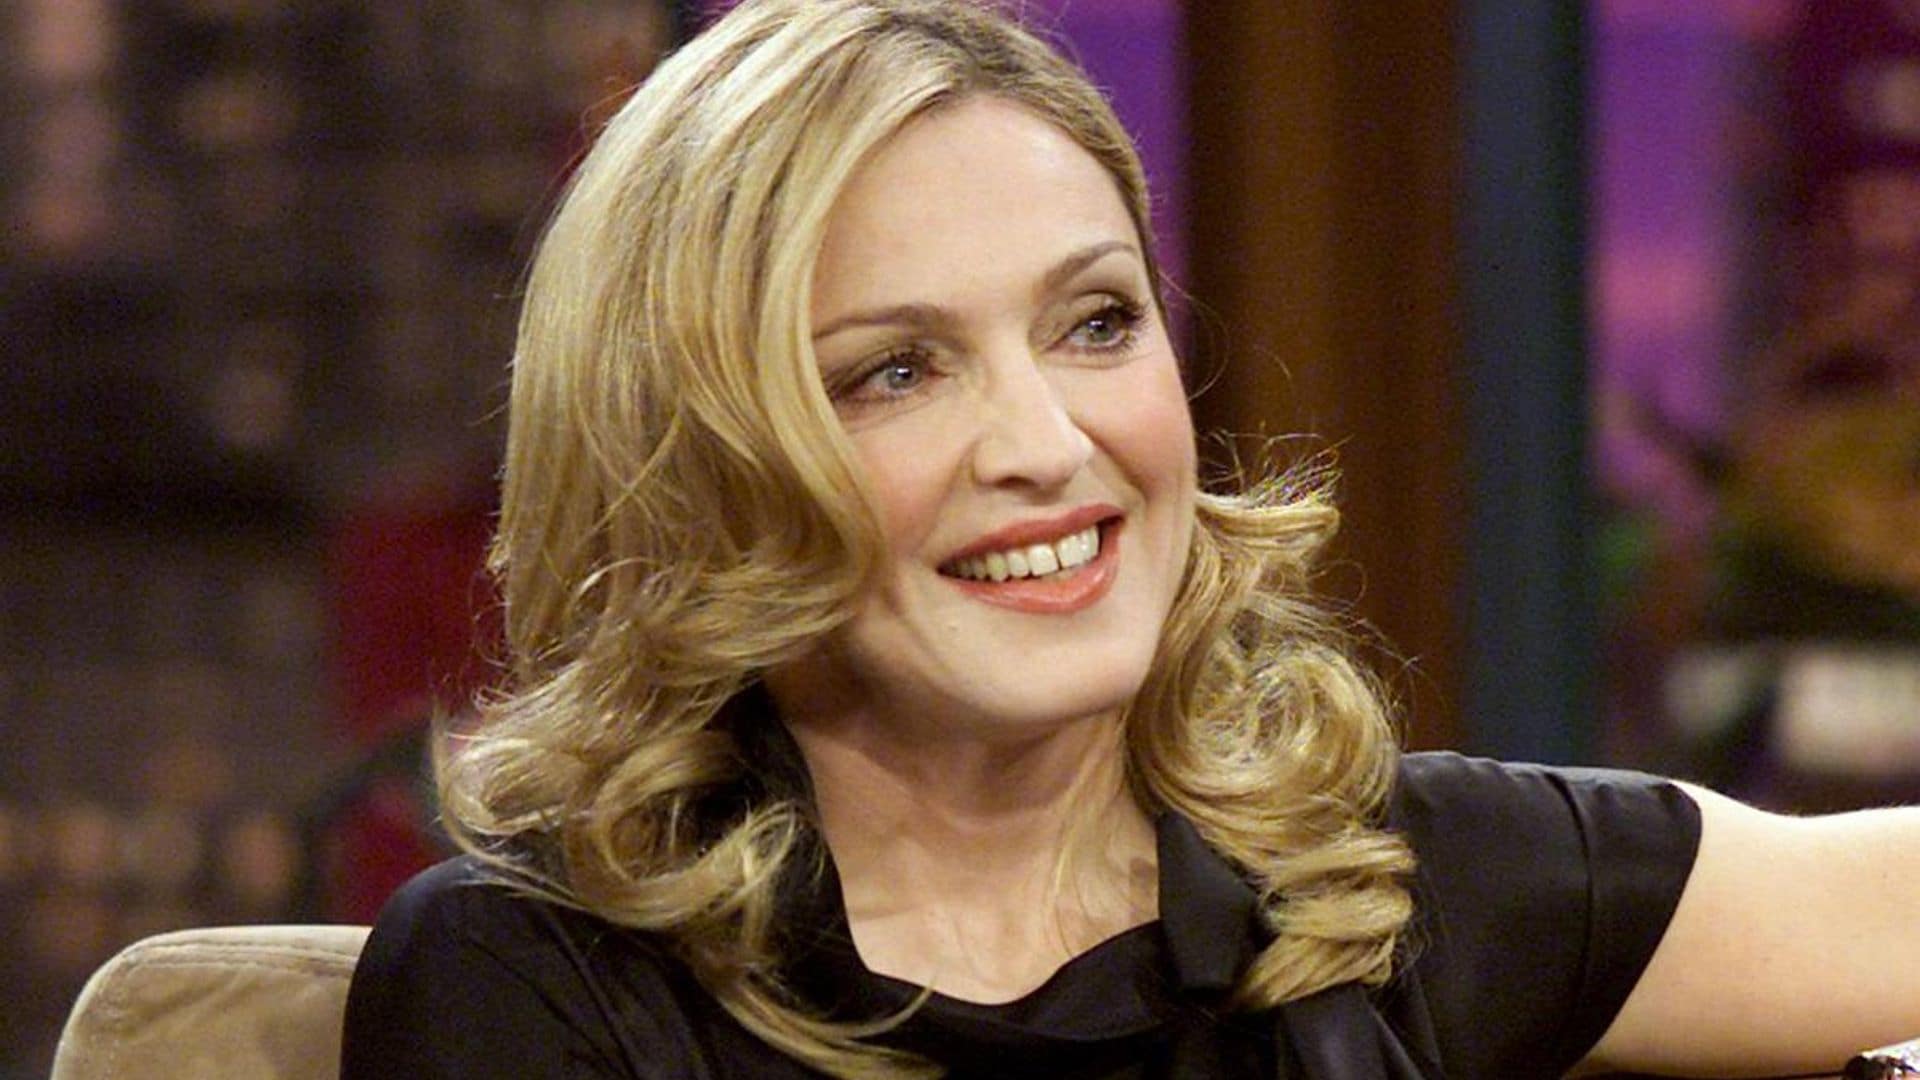 Madonna on "The Tonight Show with Jay Leno" - November 26, 2003